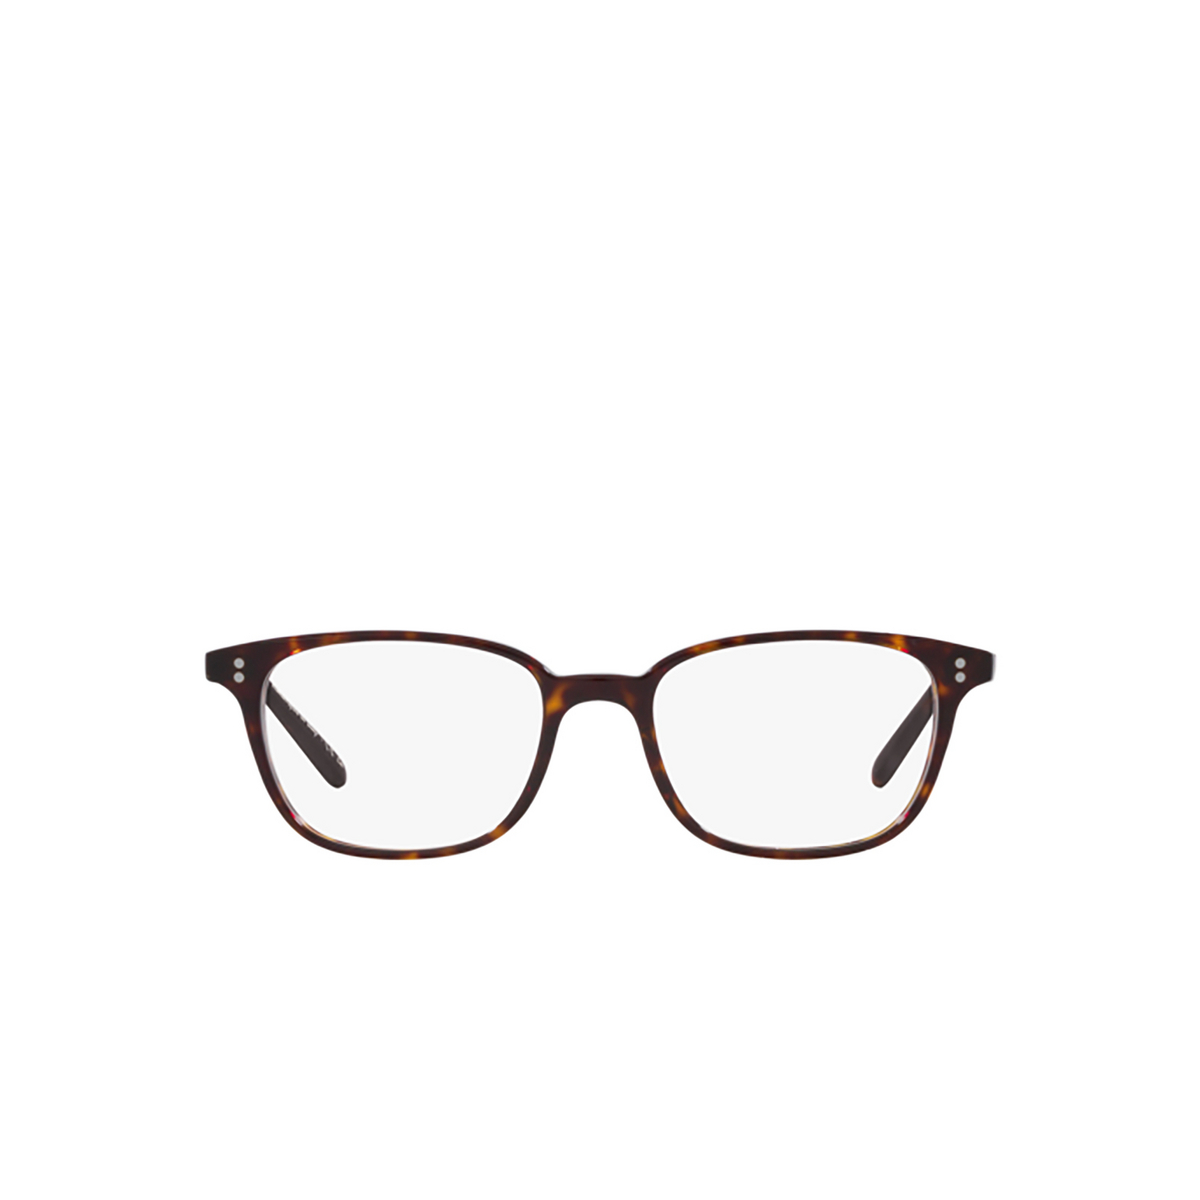 Oliver Peoples MASLON Eyeglasses 1009 362 - front view